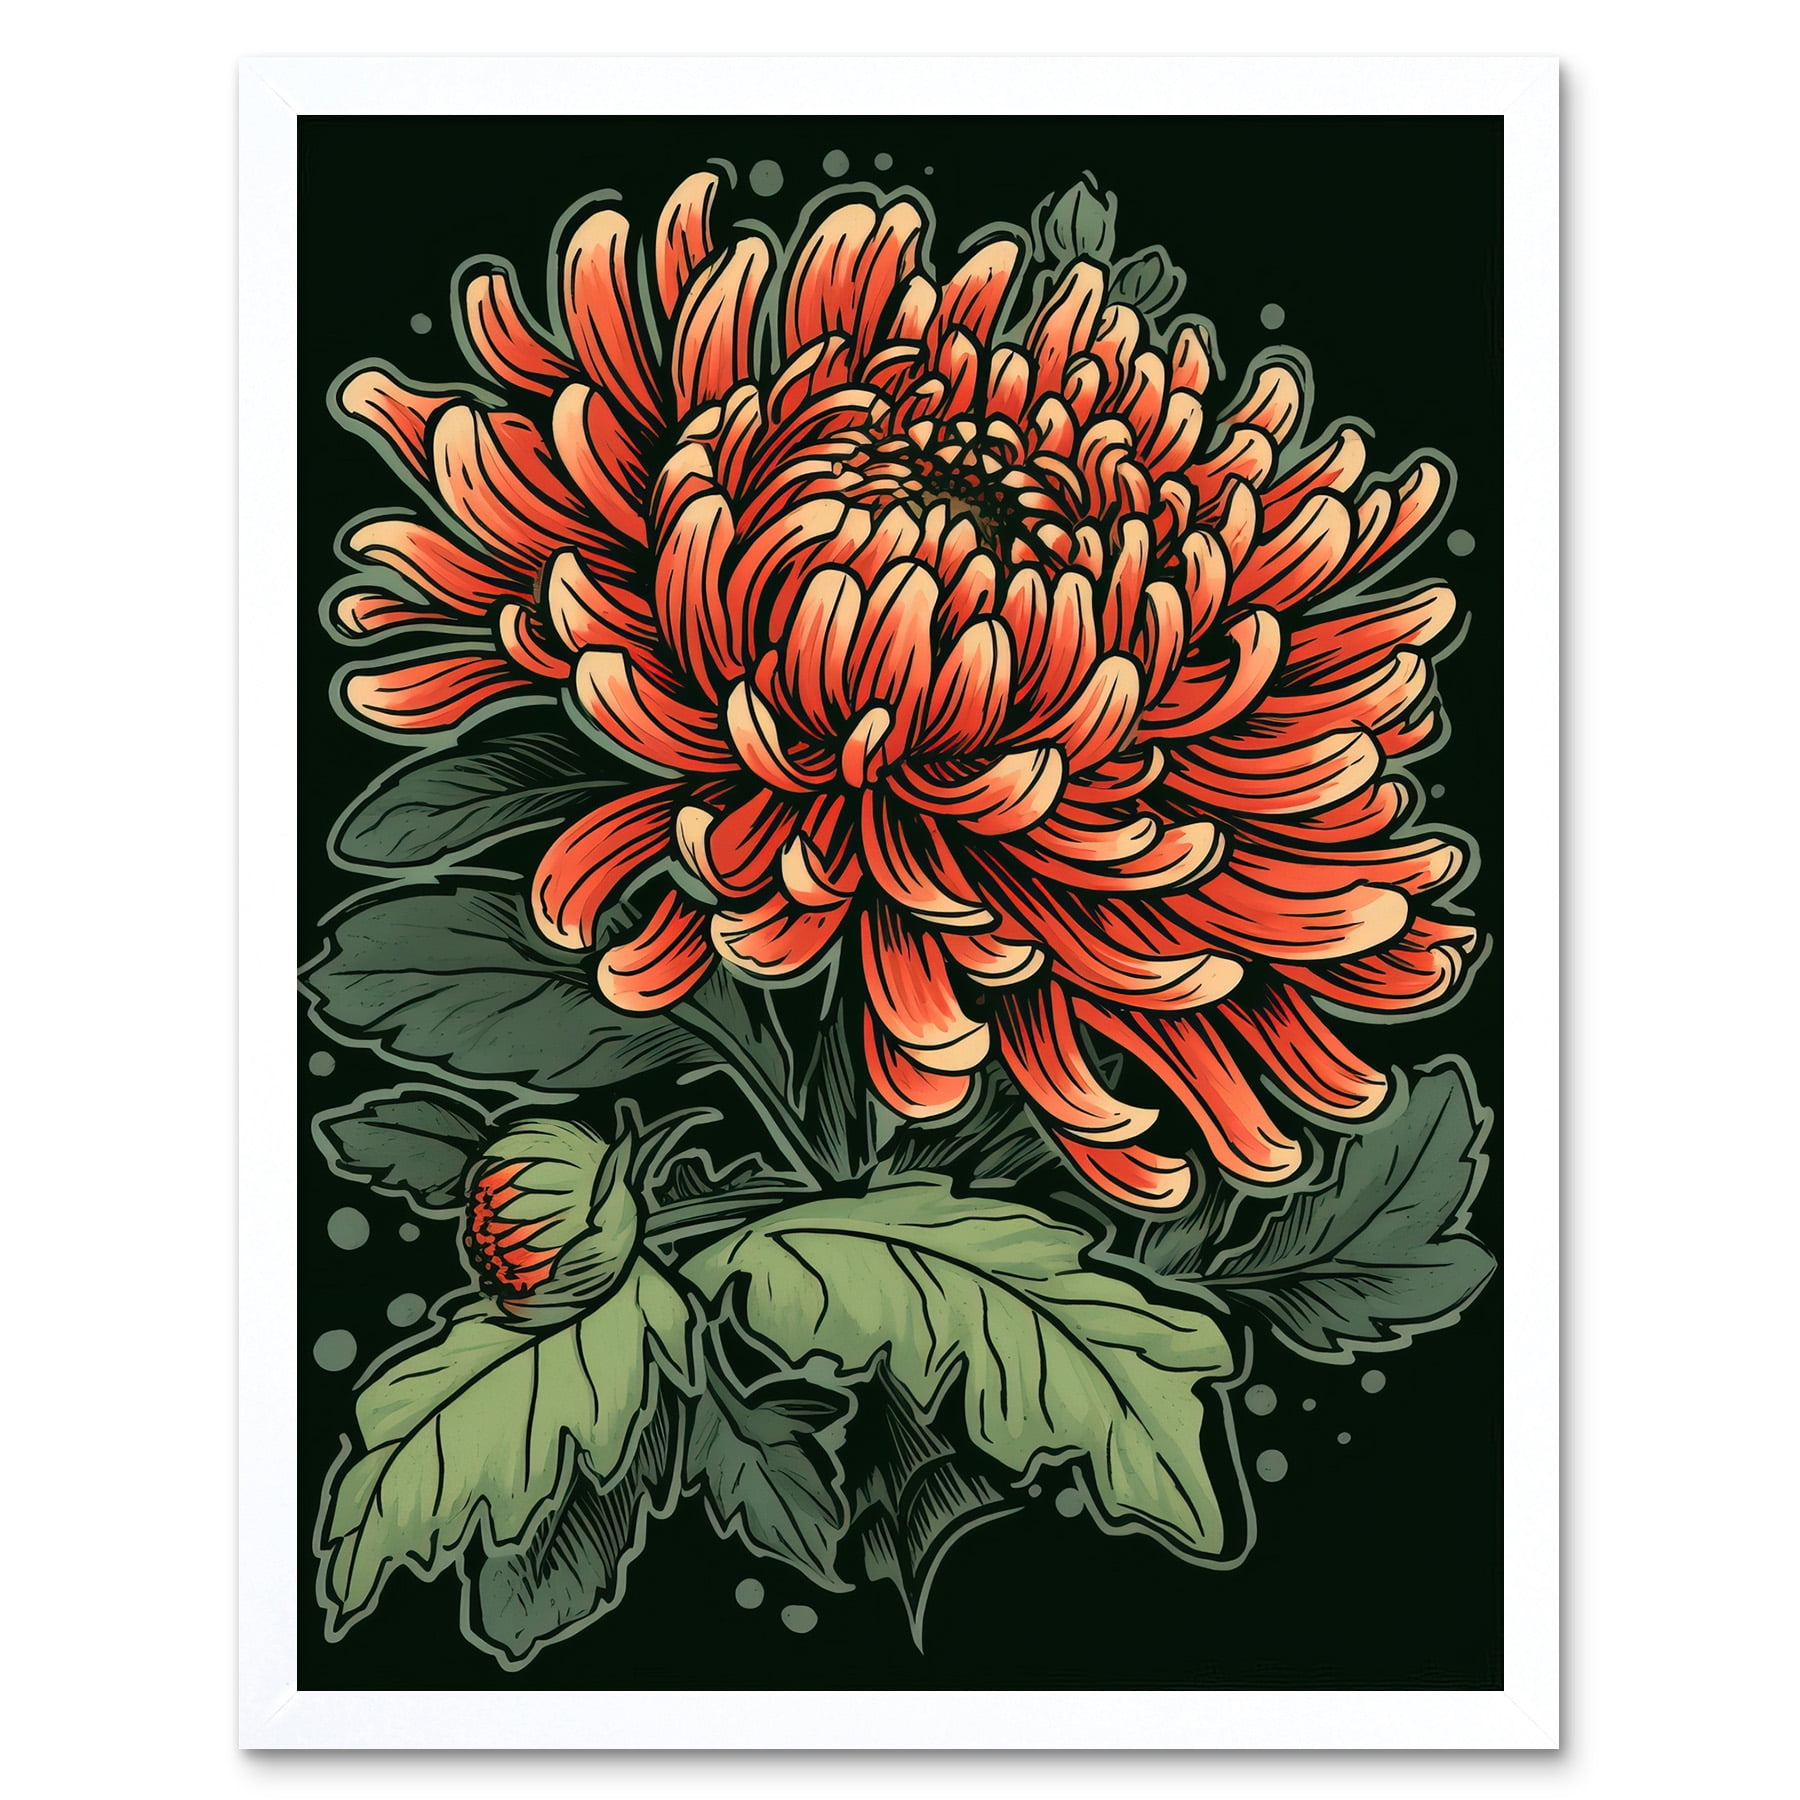 Chrysanthemum tattoo by Finley Jordan - Tattoogrid.net